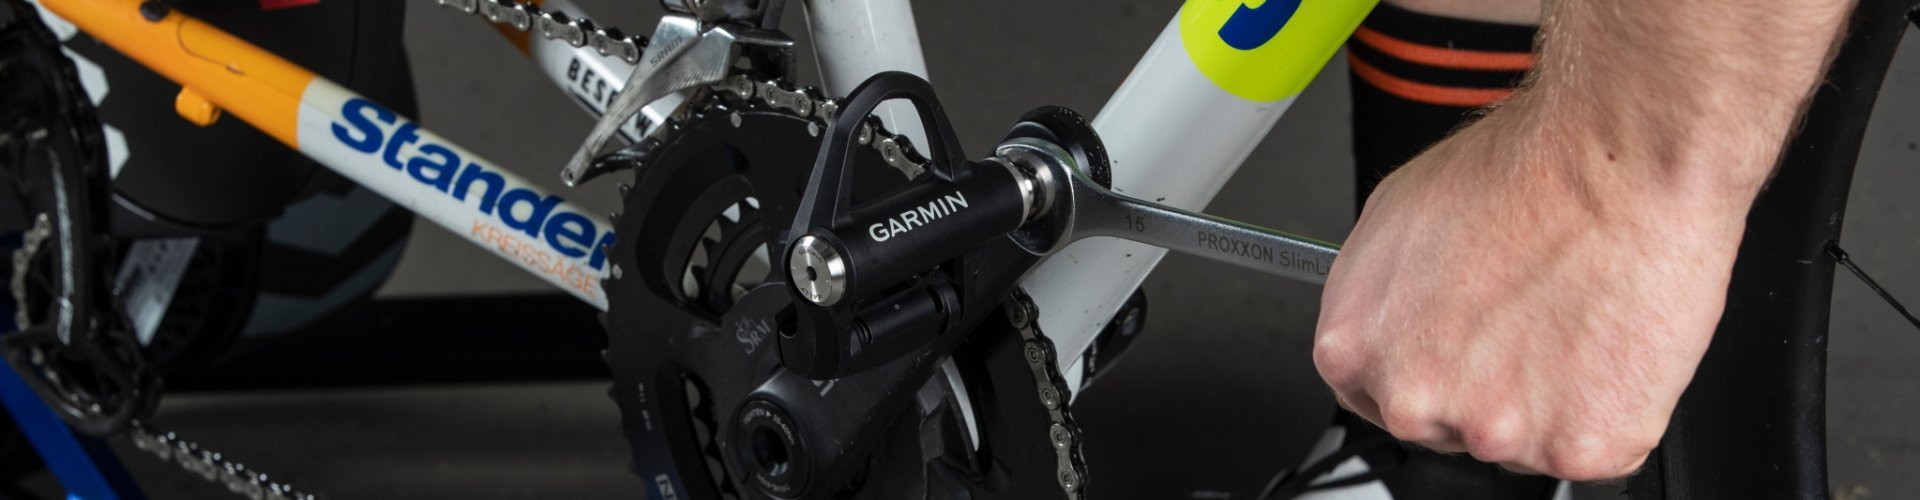 Testbericht: Garmin Rally Pedal-Powermeter